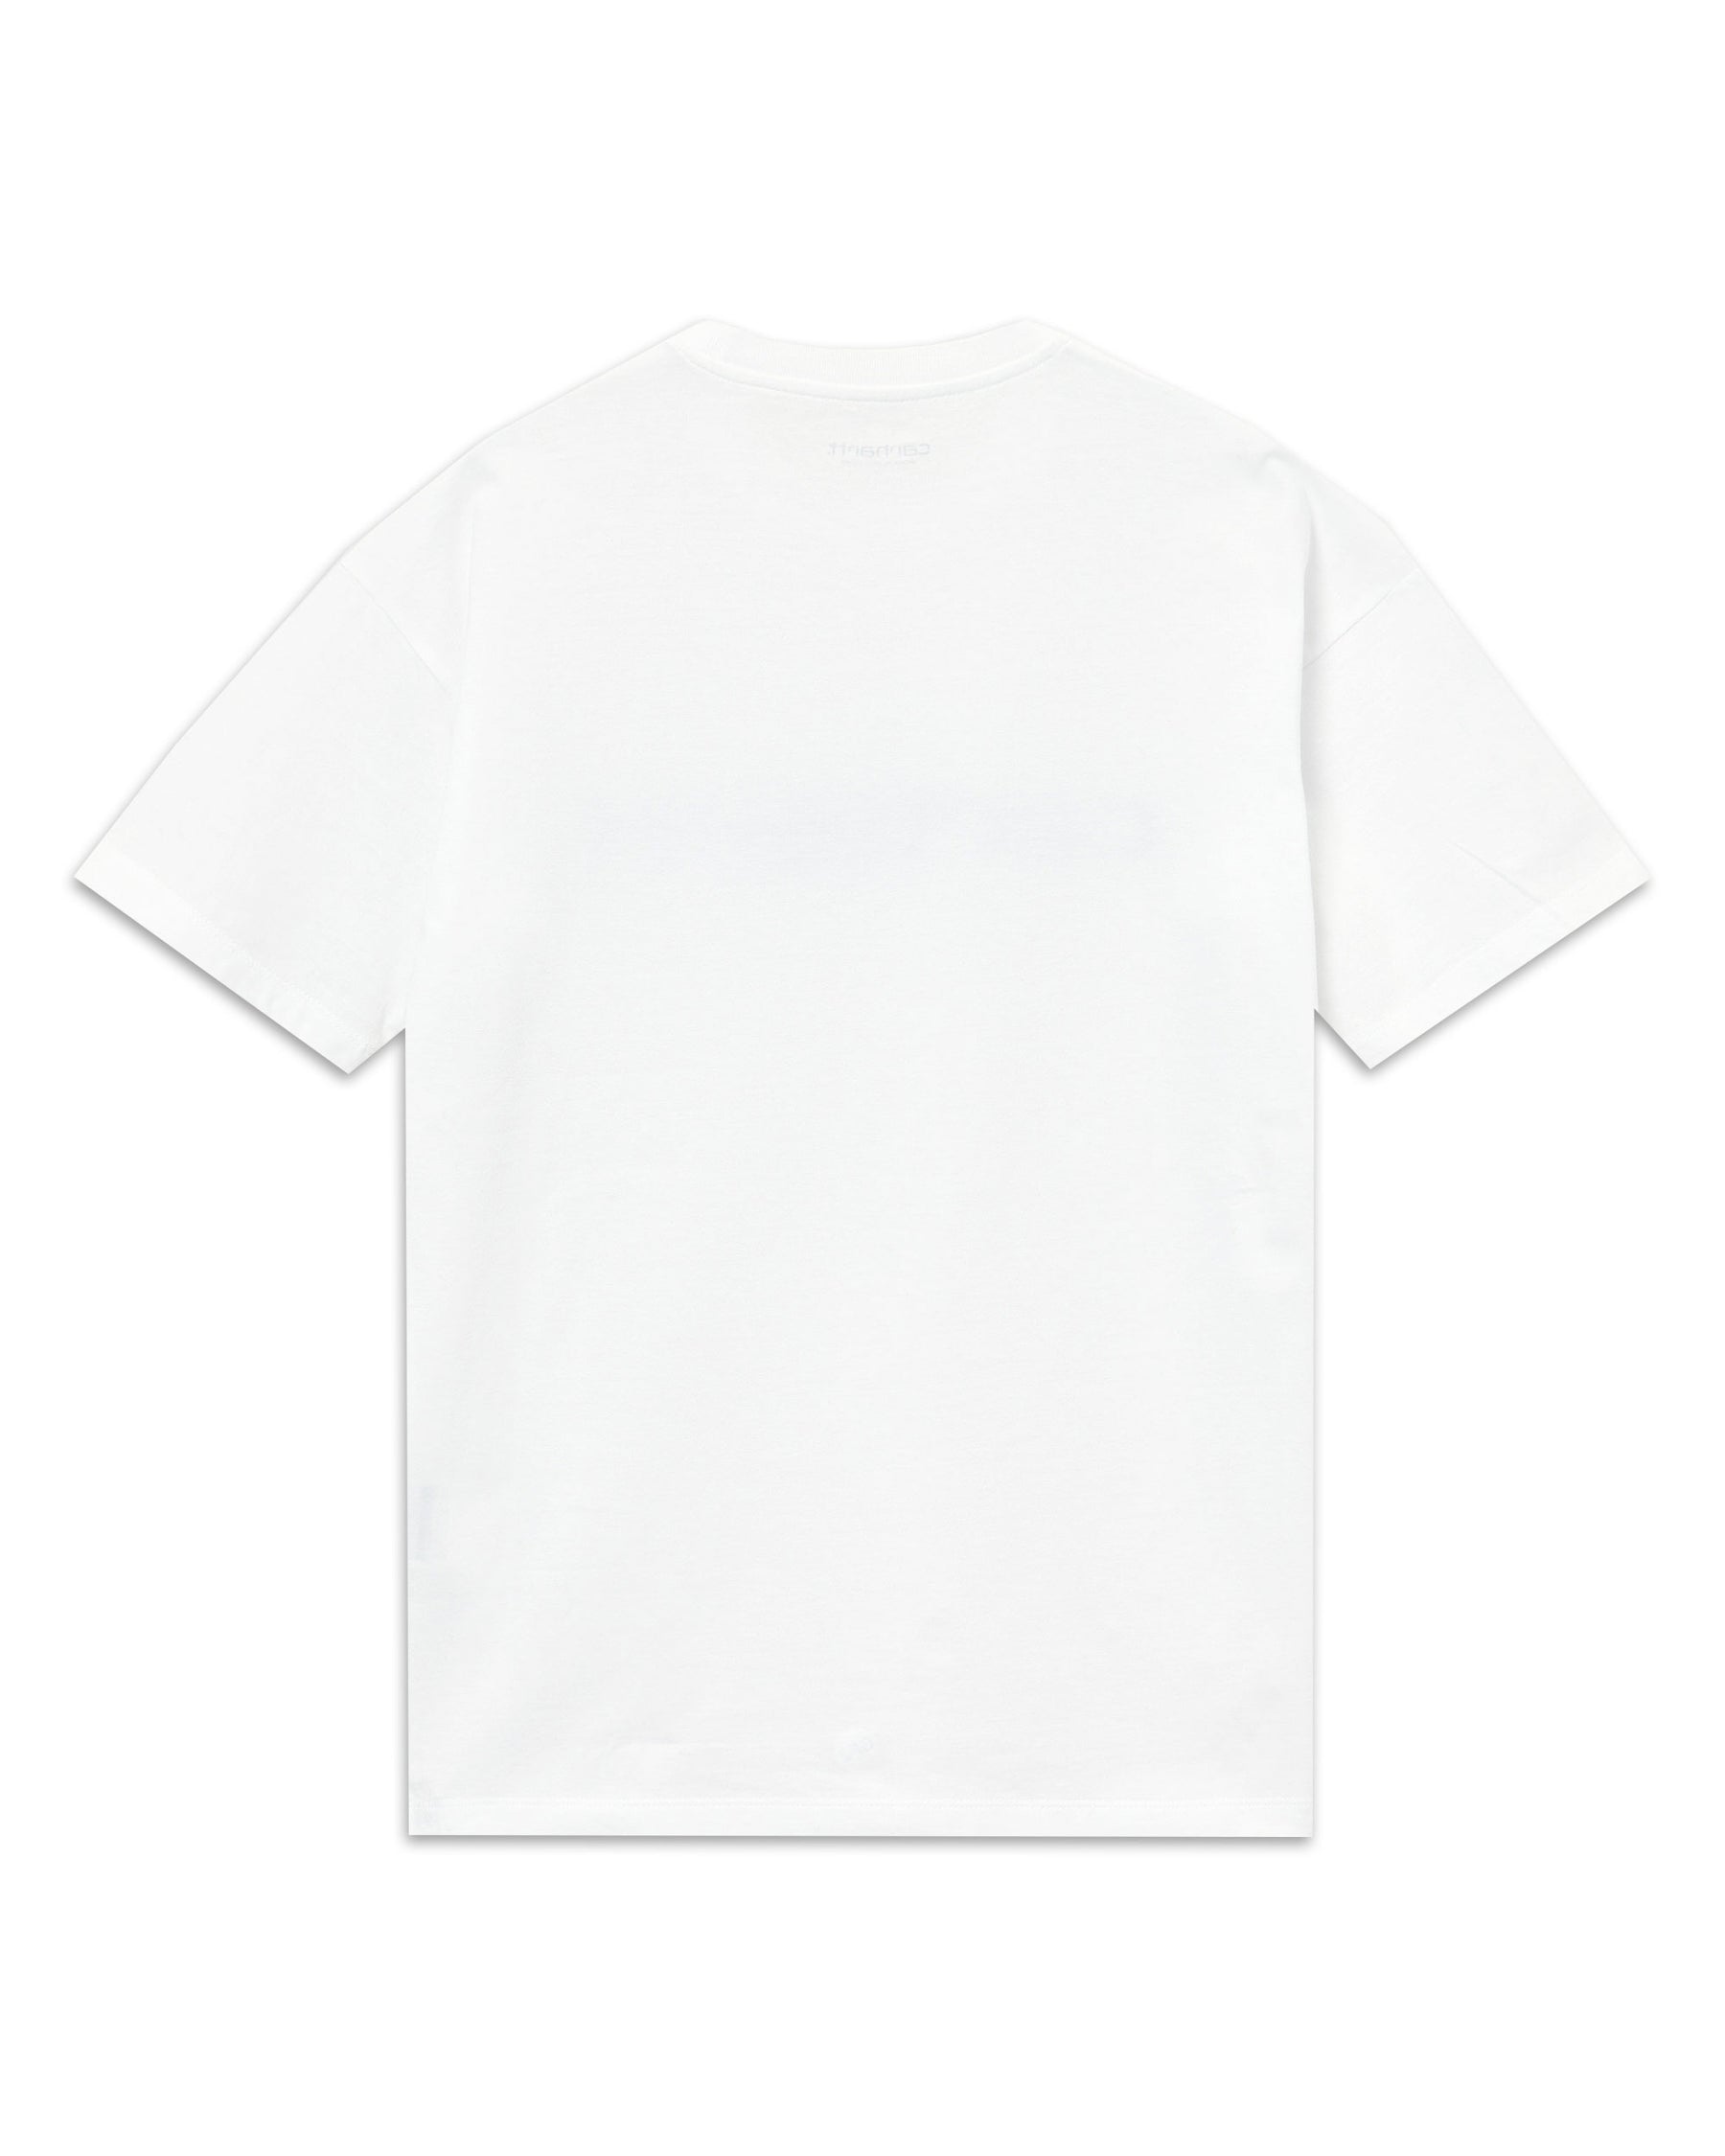 T-Shirt Carhartt Script I029076-00AXX